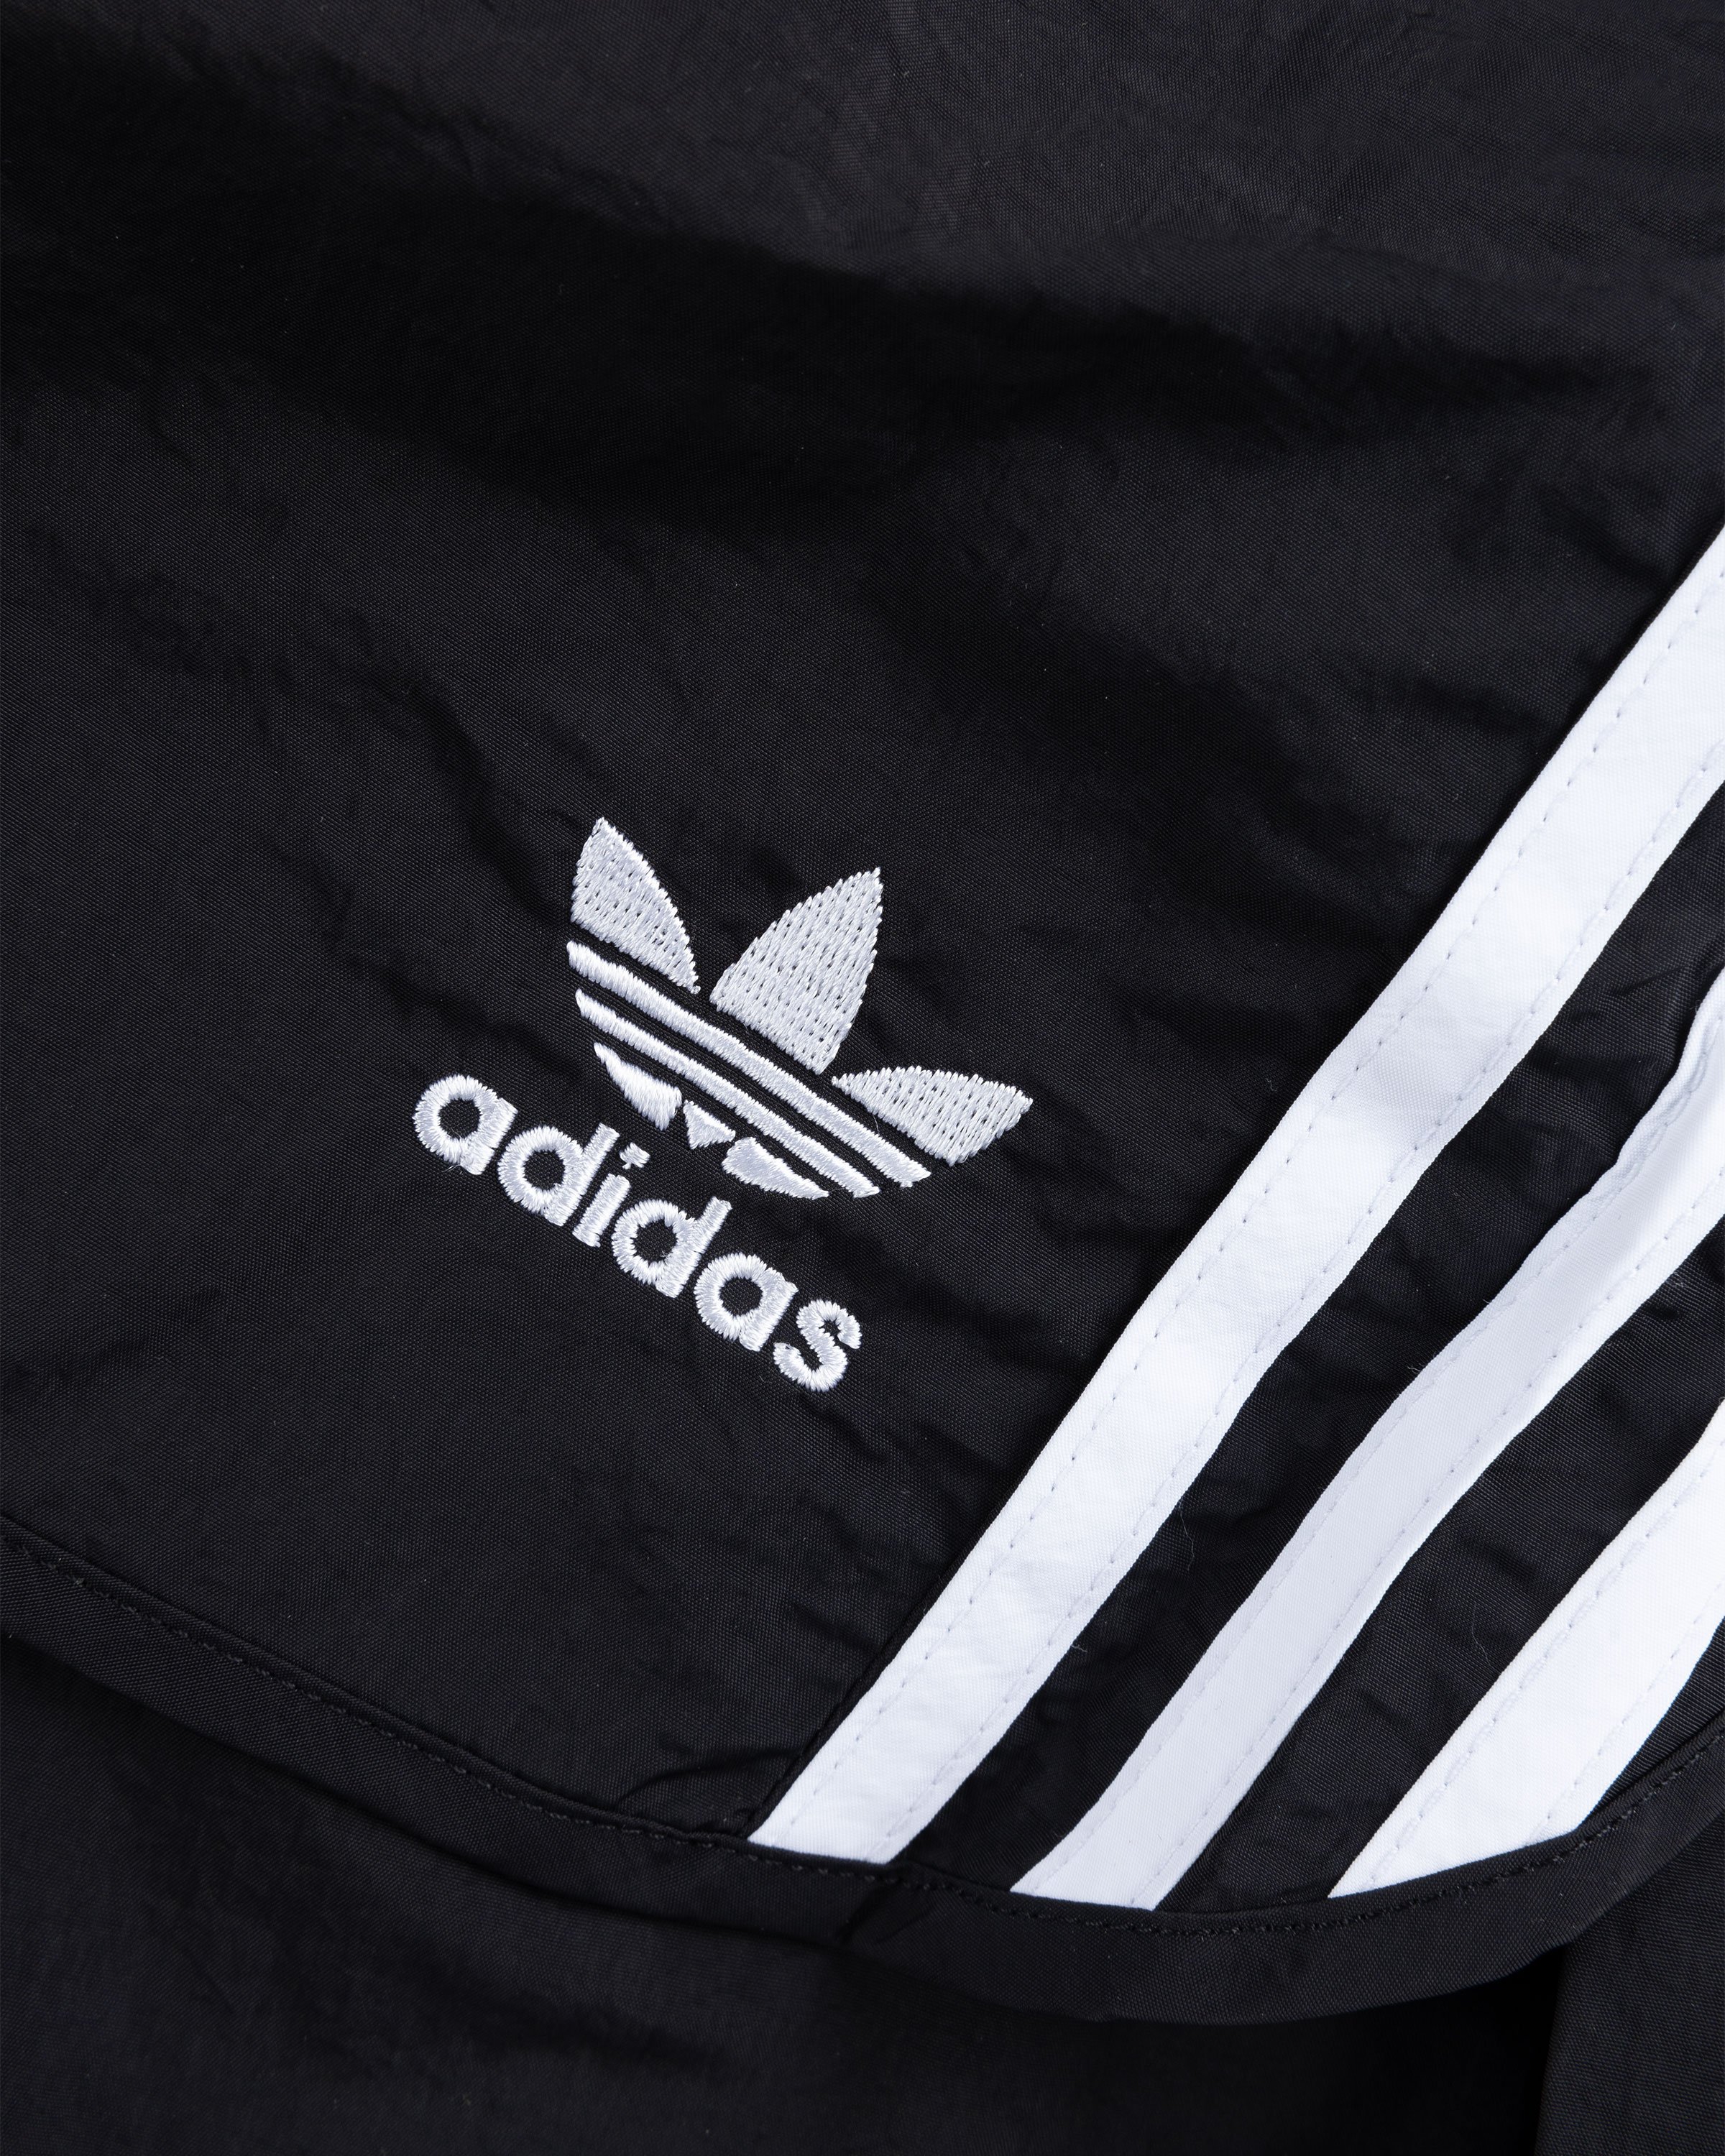 Adidas - SPRINTER SHORTS BLACK - Clothing - Black - Image 6